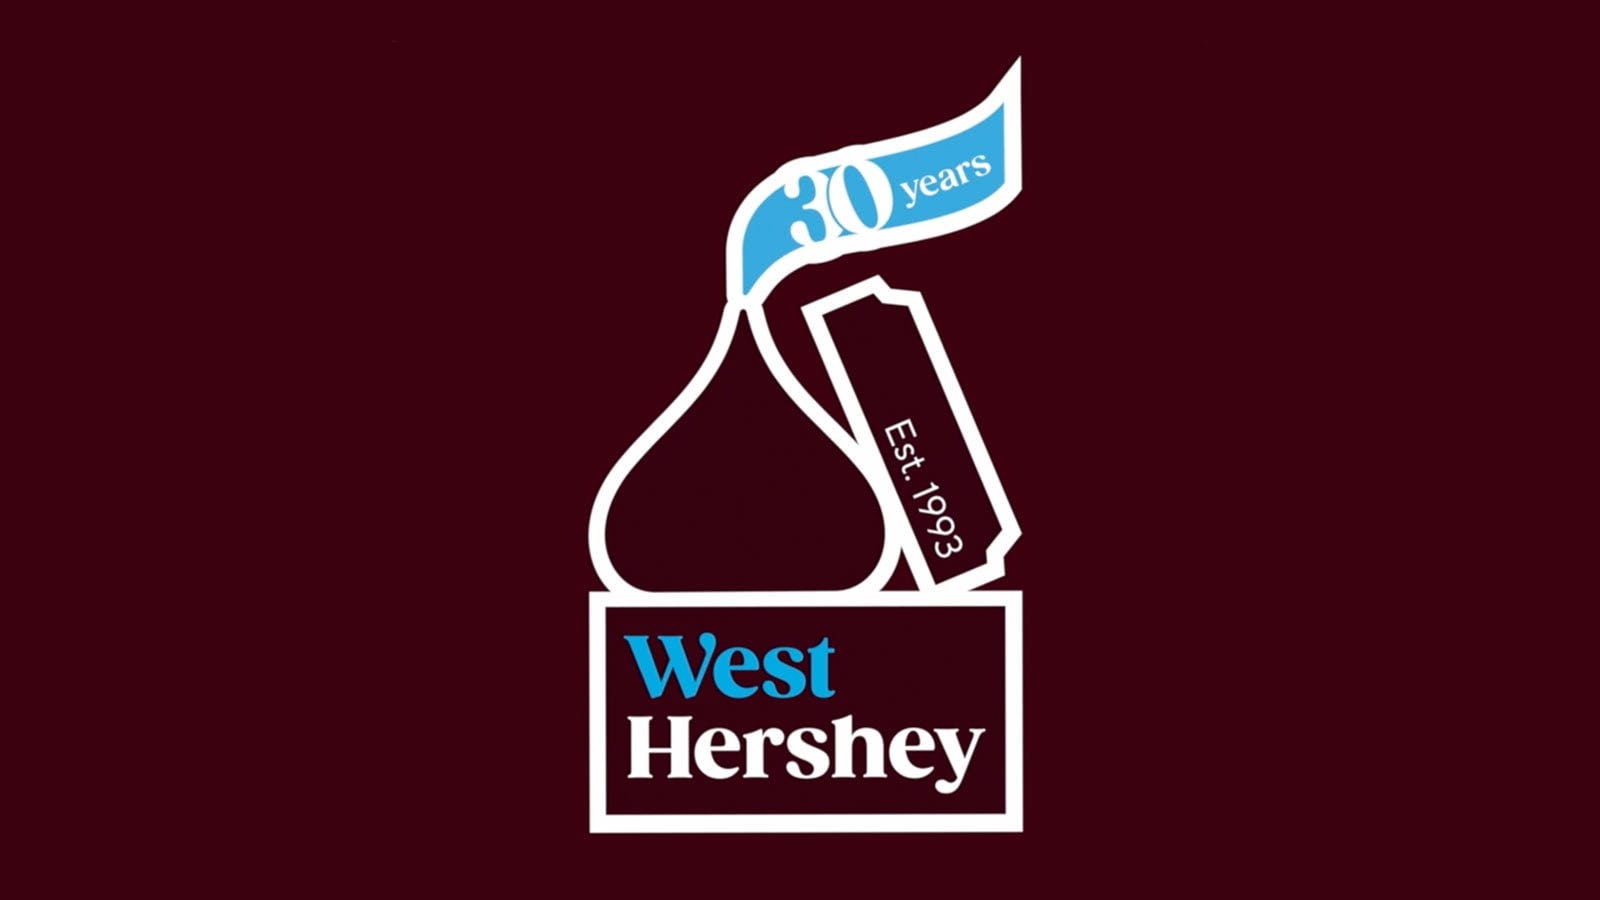 30 Years - West Hershey